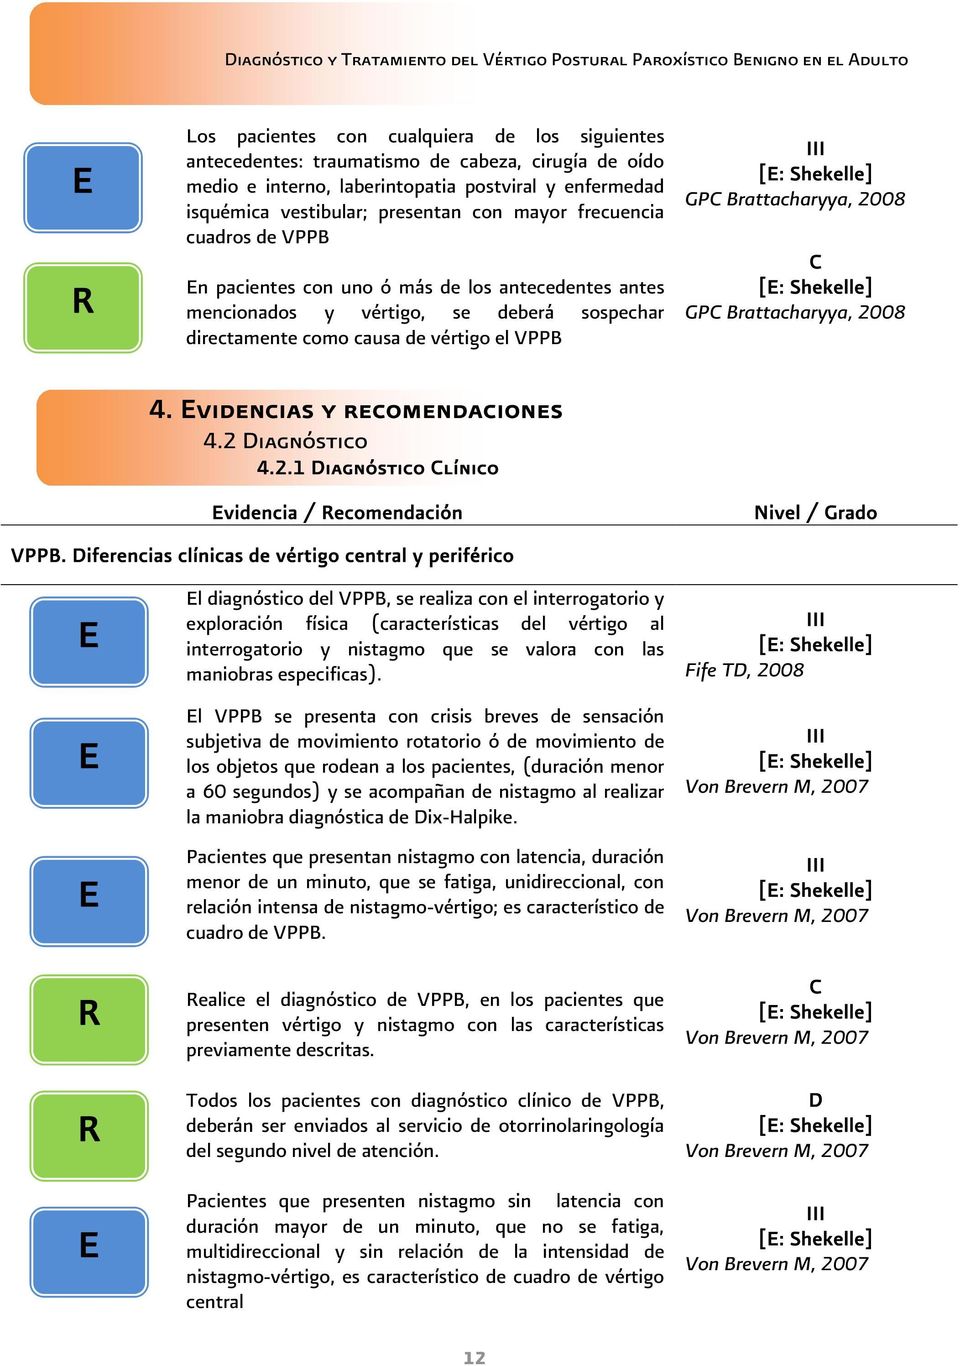 2 Diagnóstico 4.2.1 Diagnóstico Clínico videncia / ecomendación VPPB.